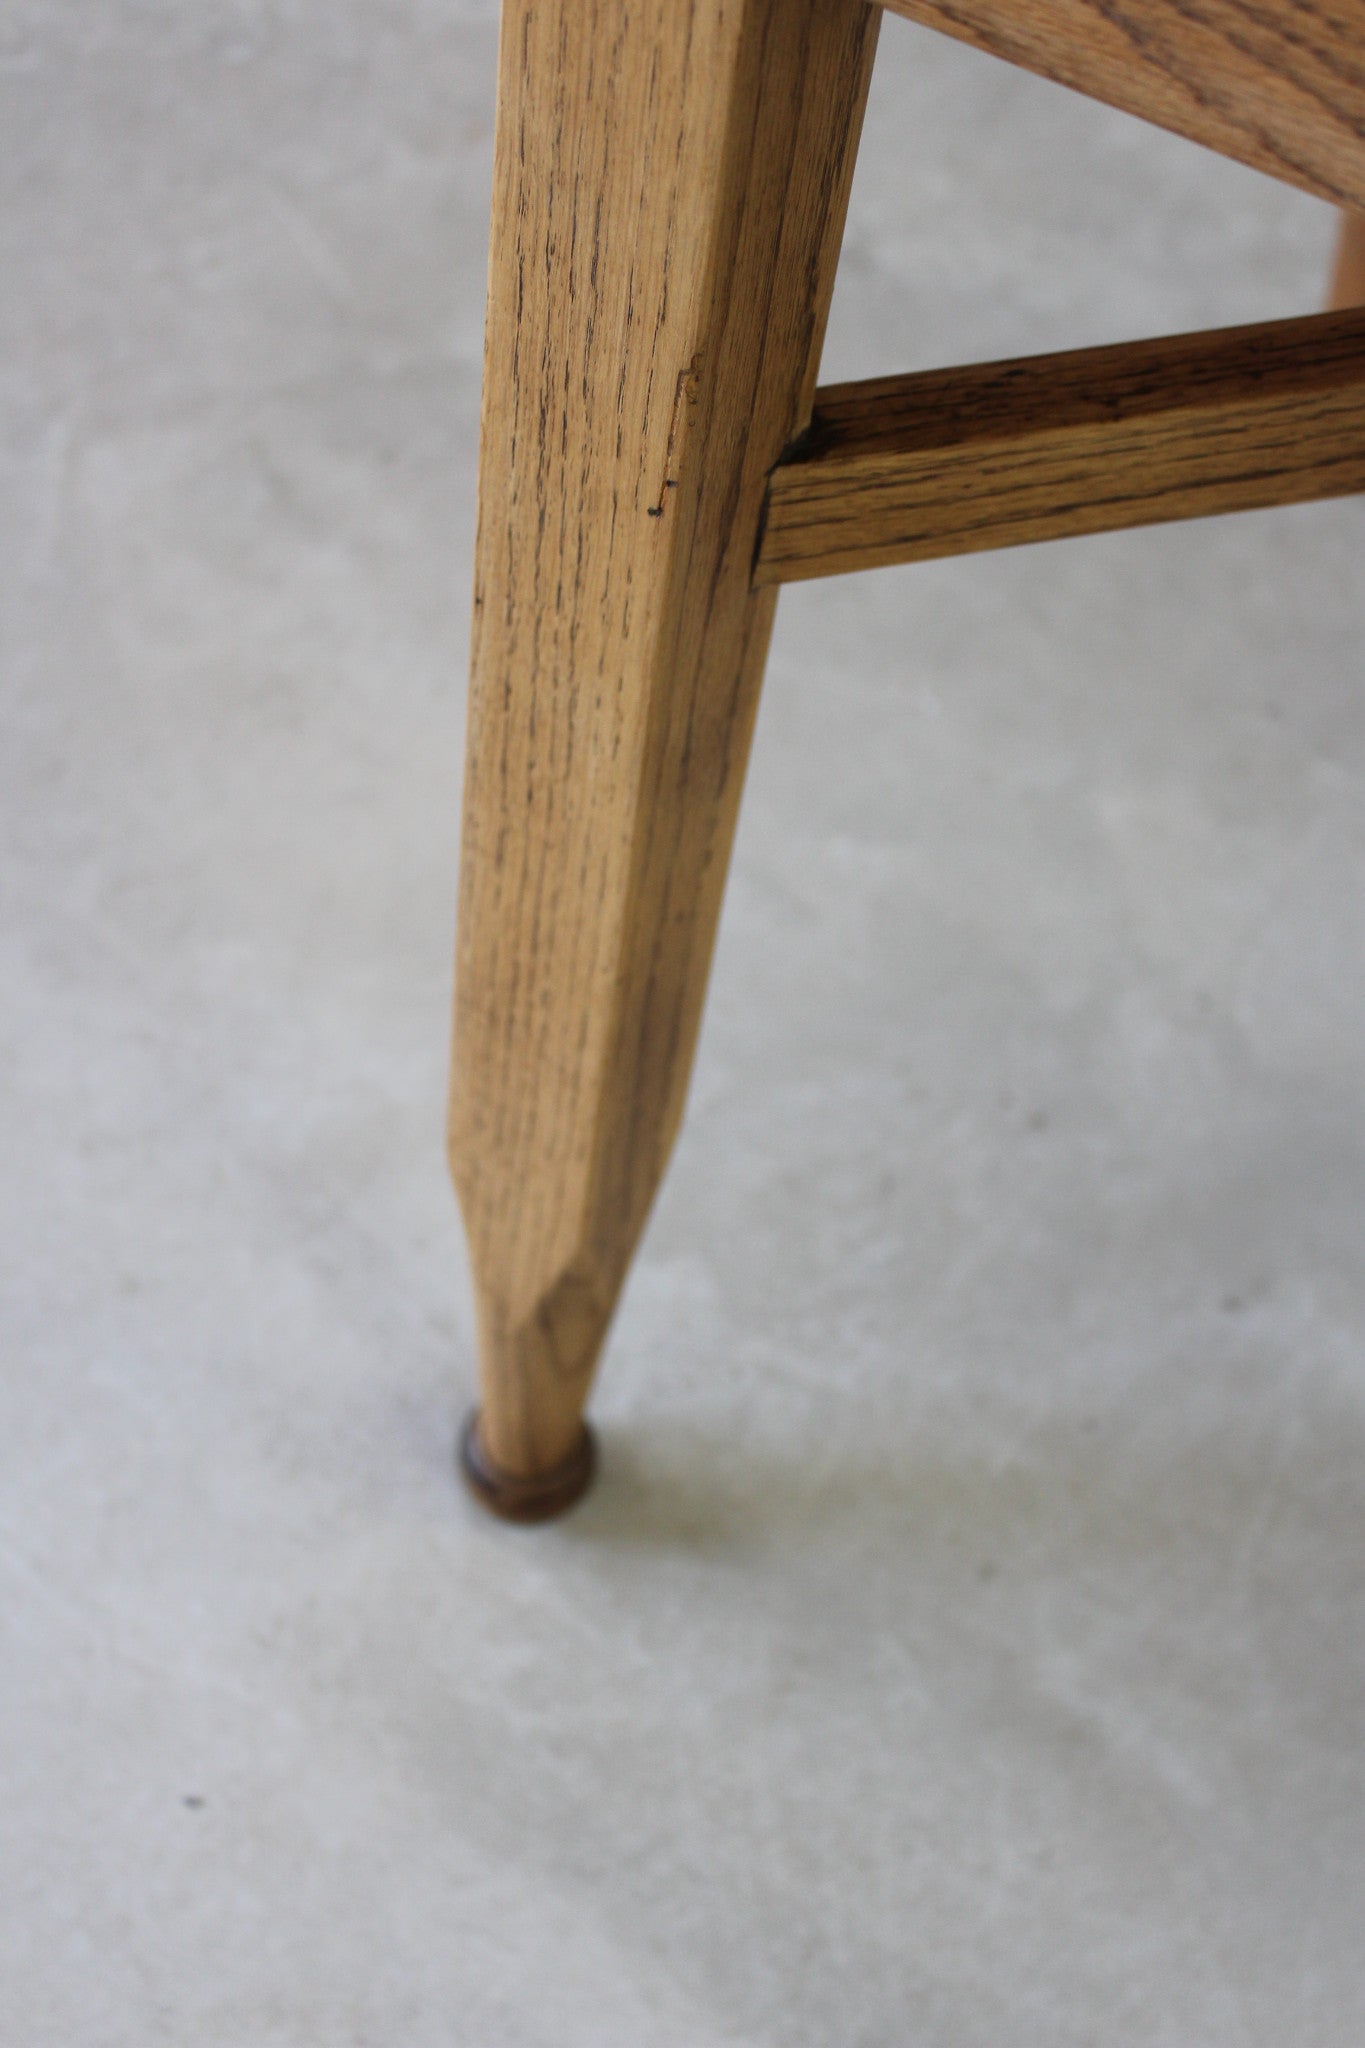 Oak Arts & Crafts Table - Kernow Furniture